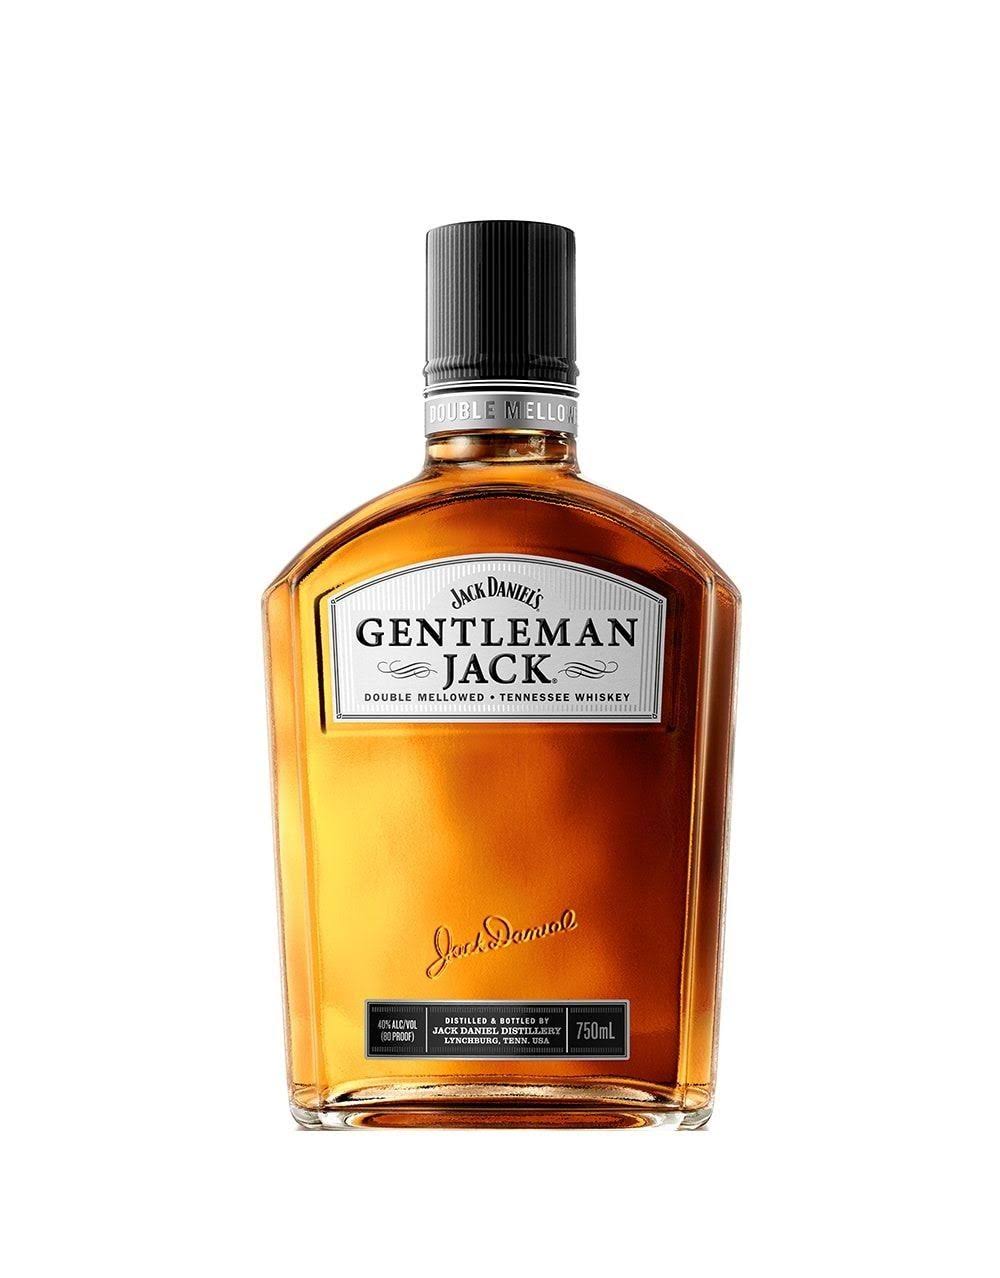 Gentleman Jack Rare TN Whiskey 750ml